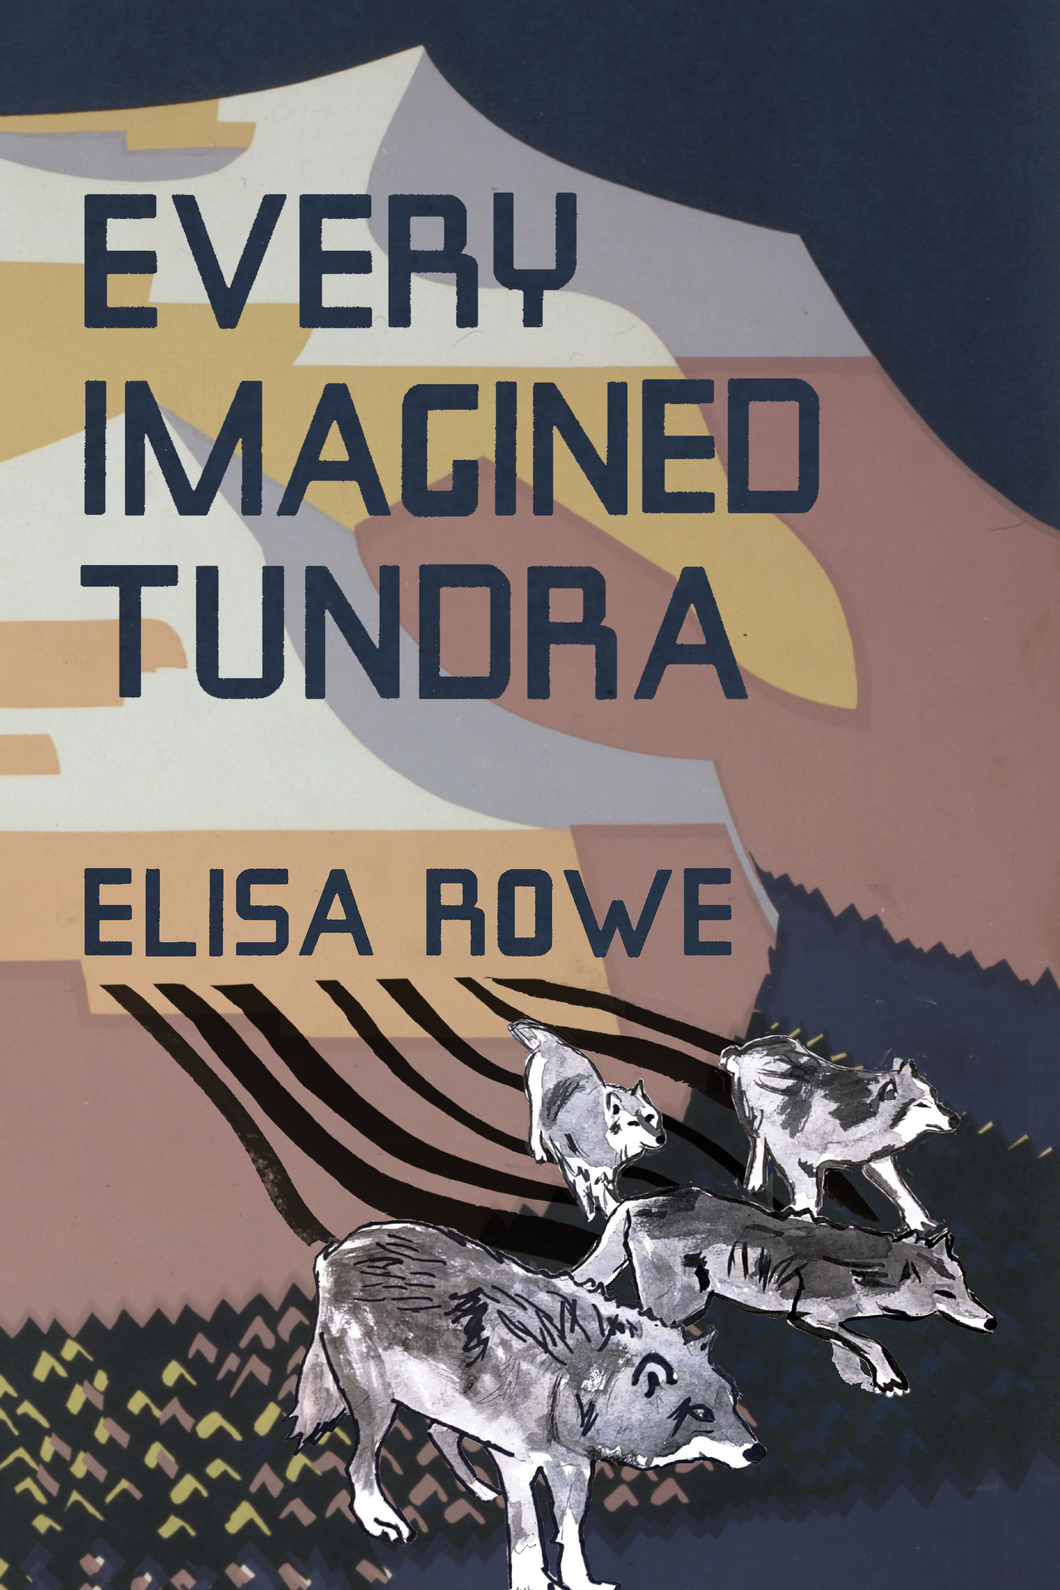 Every Imagined Tundra, by Elisa Rowe-Print Books-Bottlecap Press